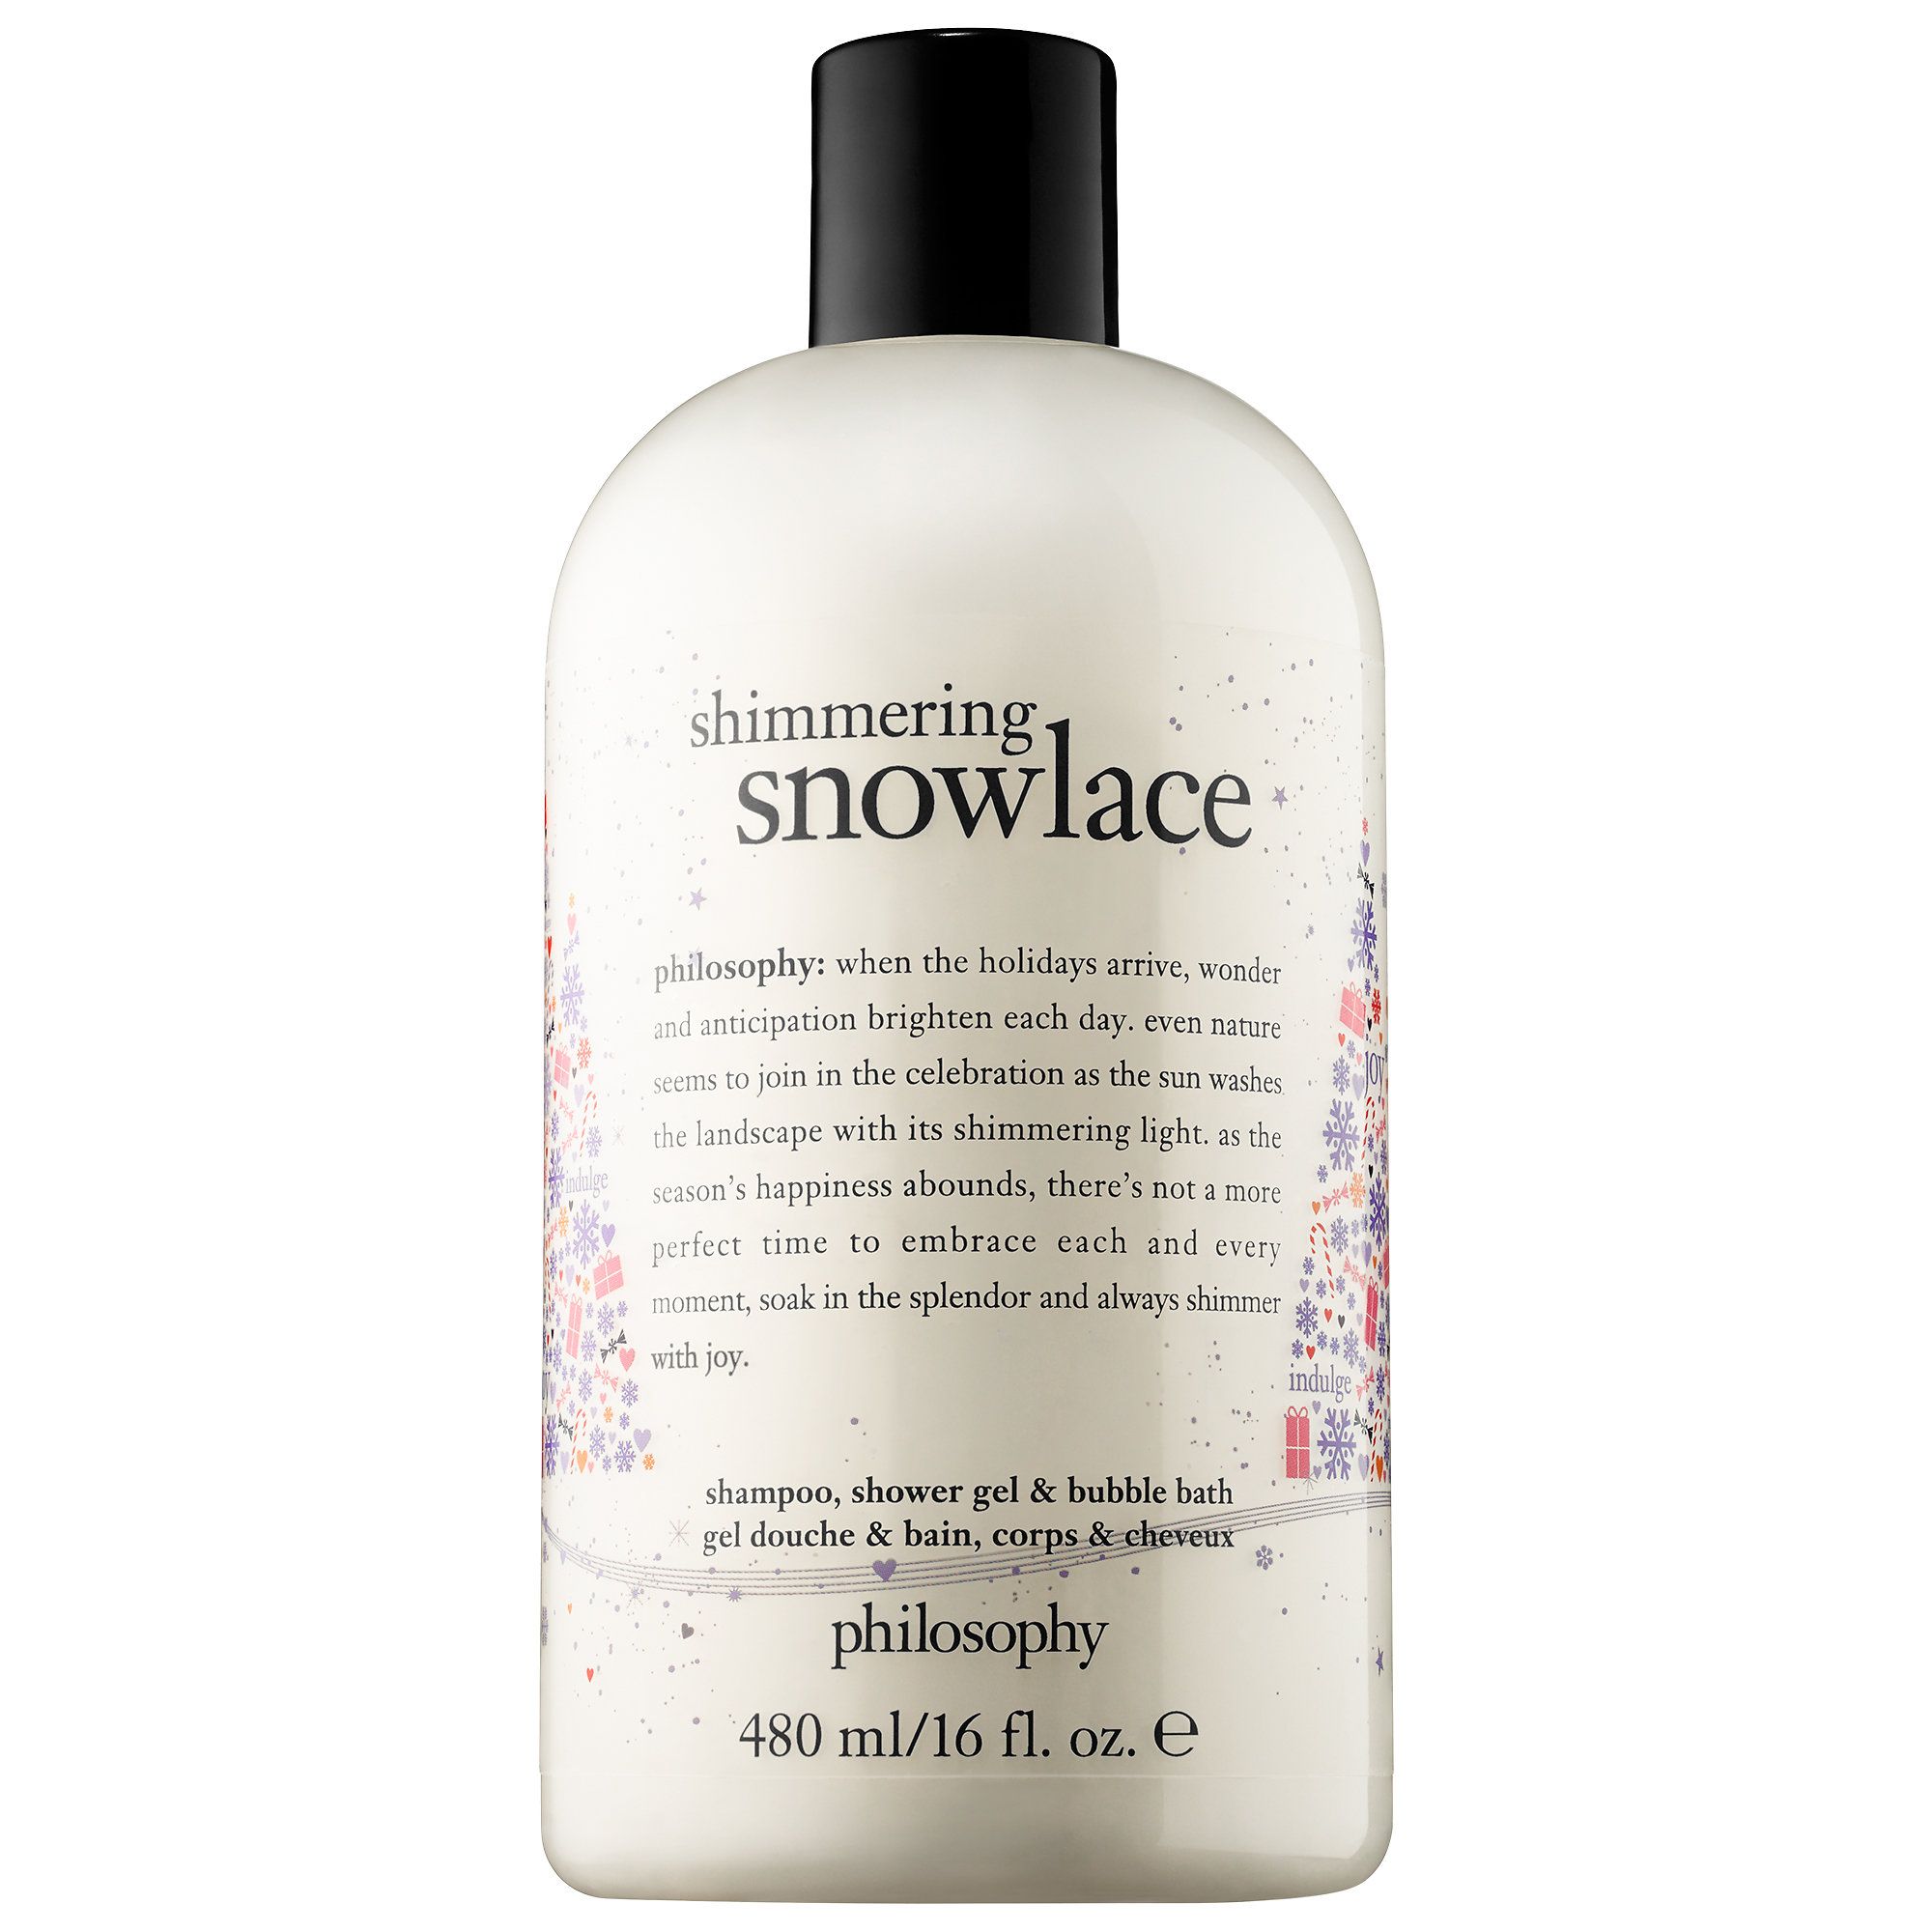 Philosophy Shimmering Snowlace Shampoo Shower Gel & Bubble Bath 480ml